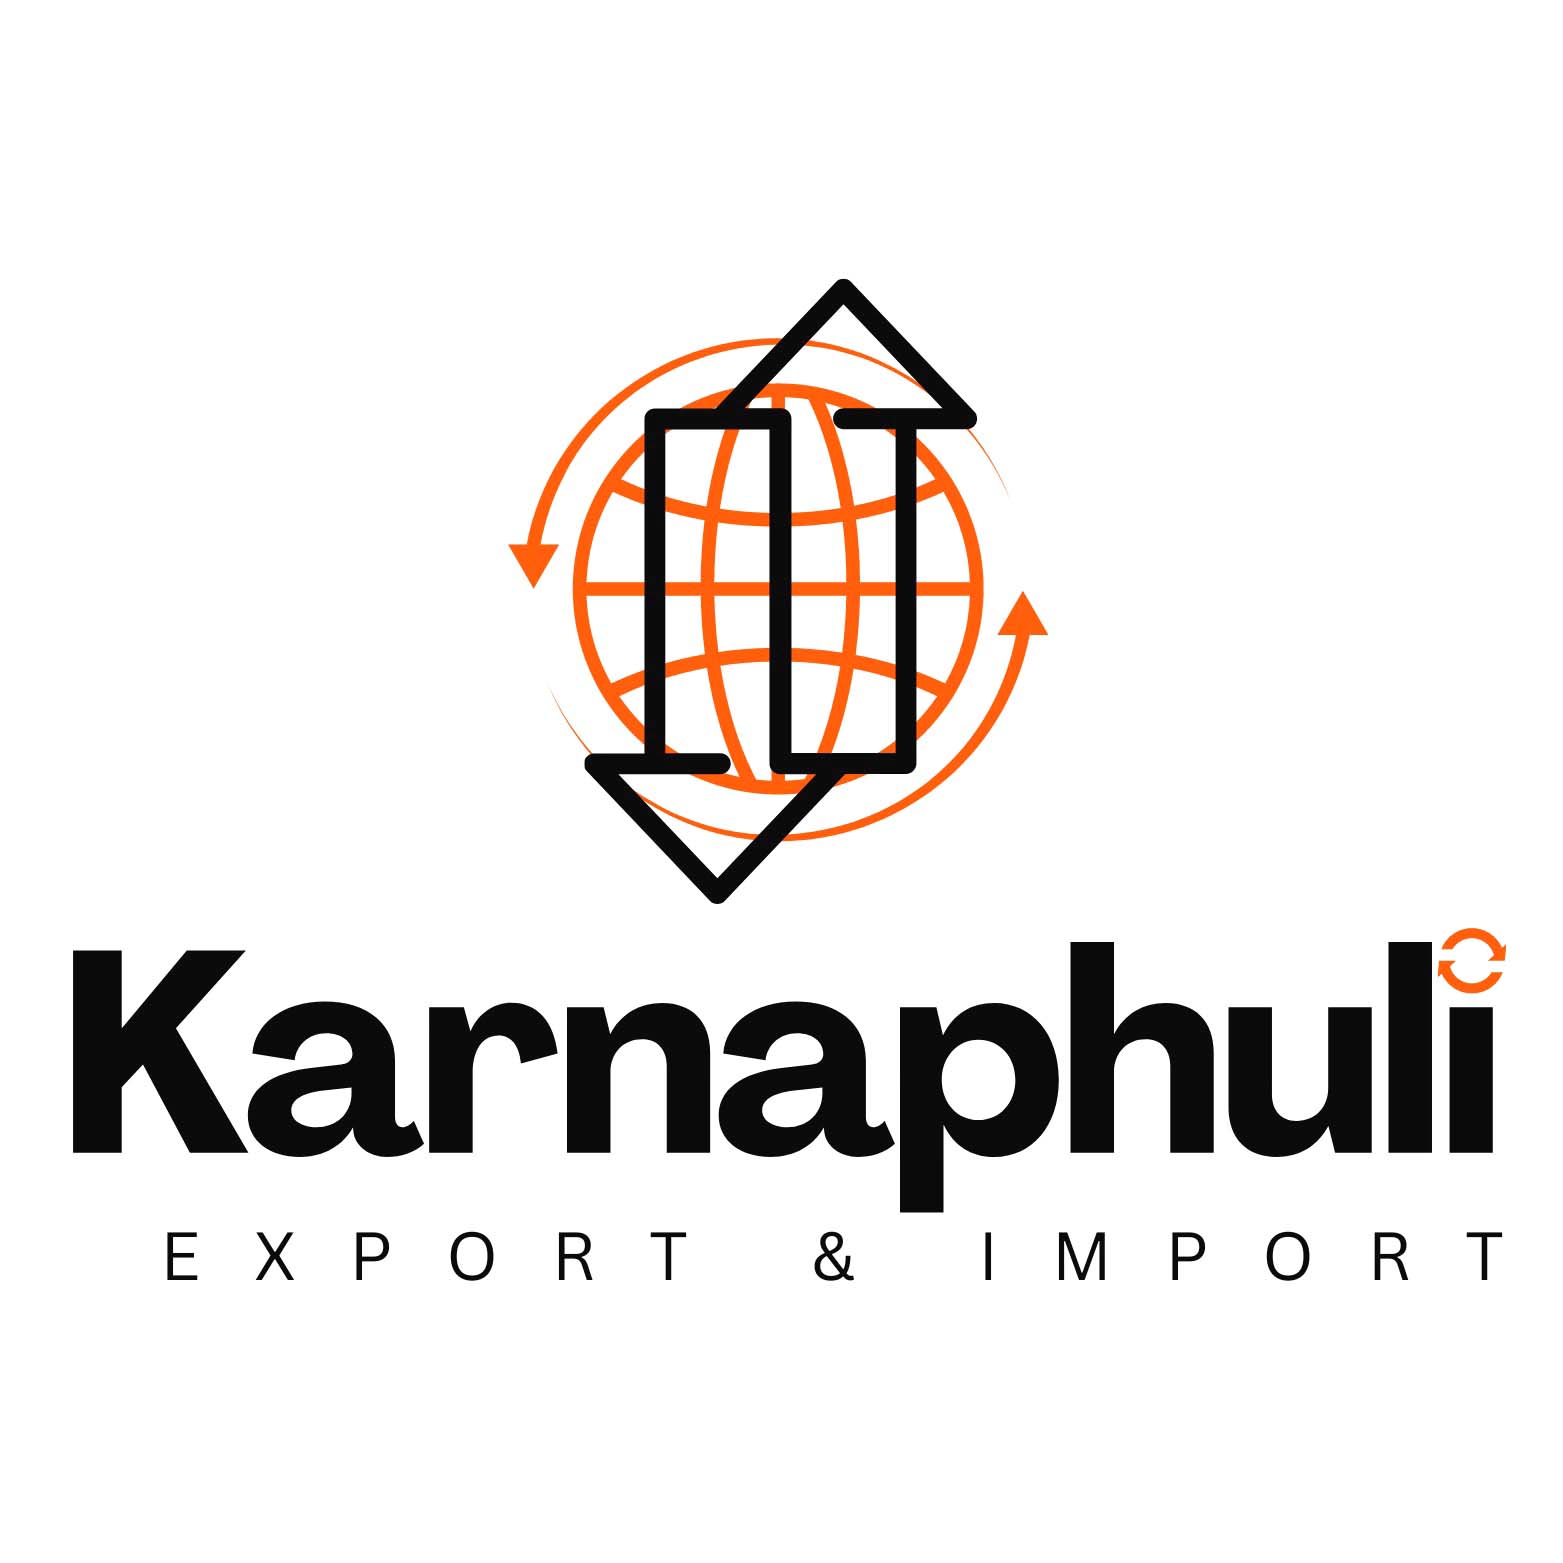 Karnaphuli Export & Import